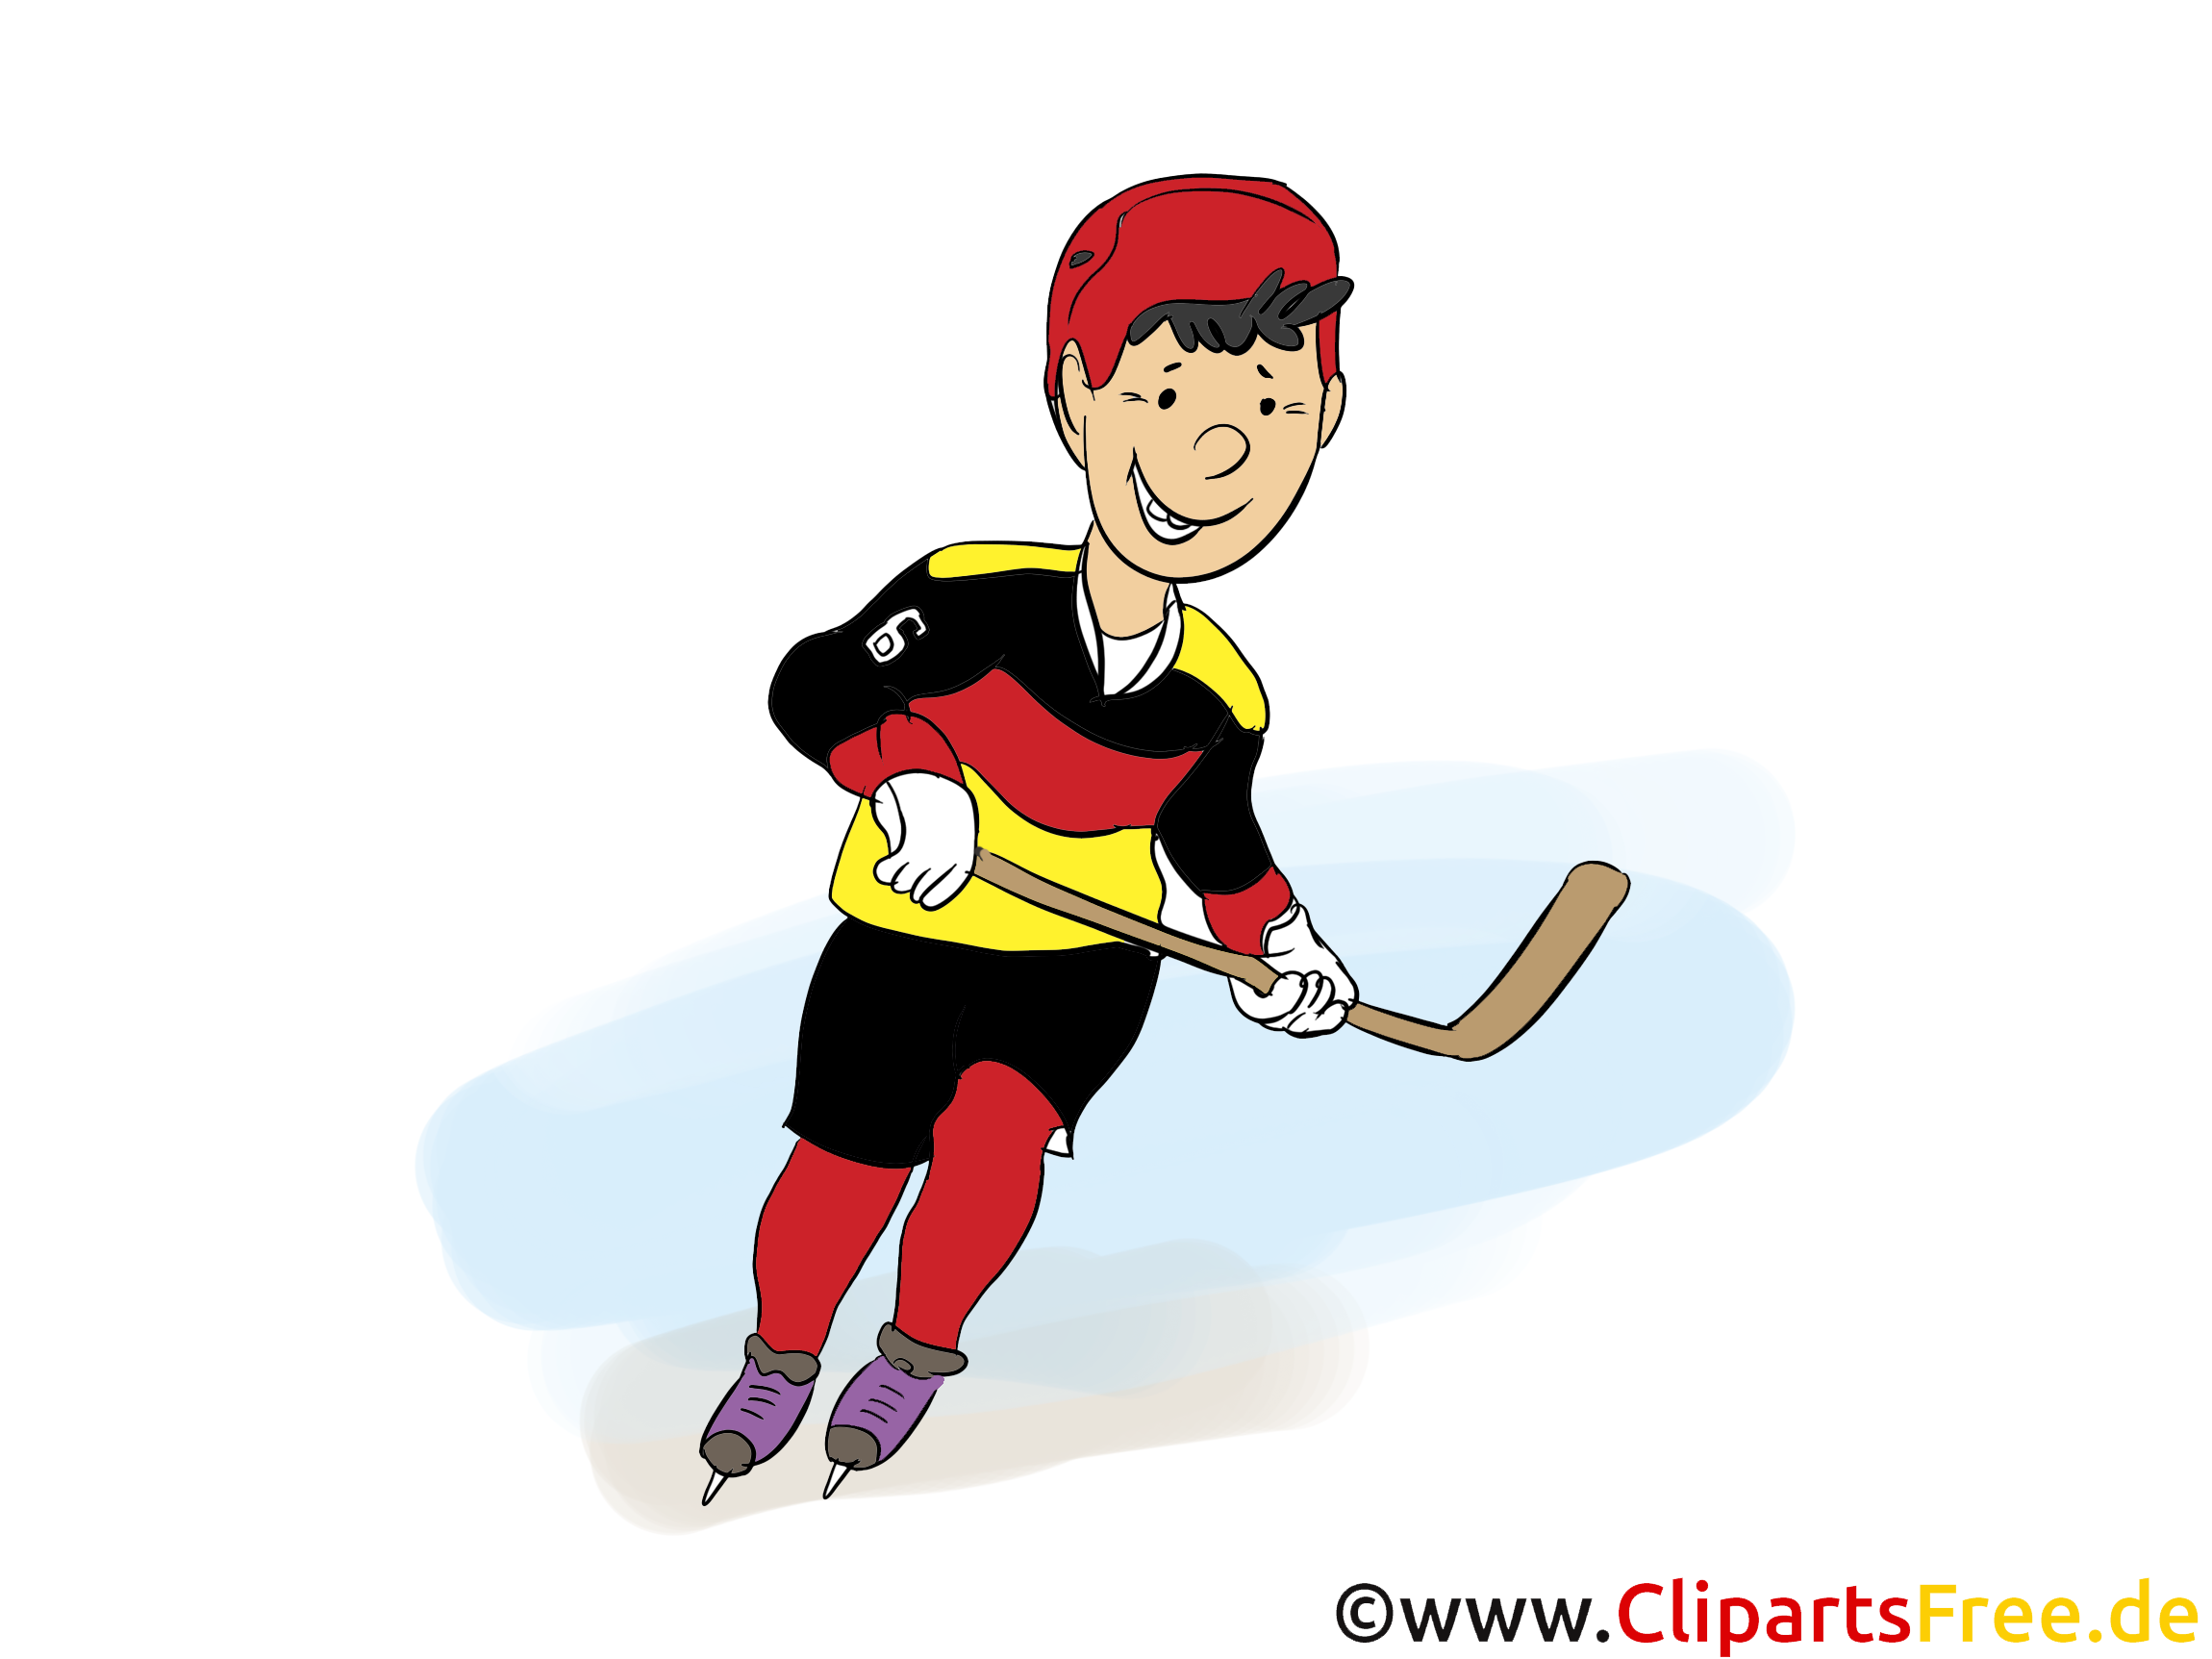 Sport d'hiver dessin - Hockey images